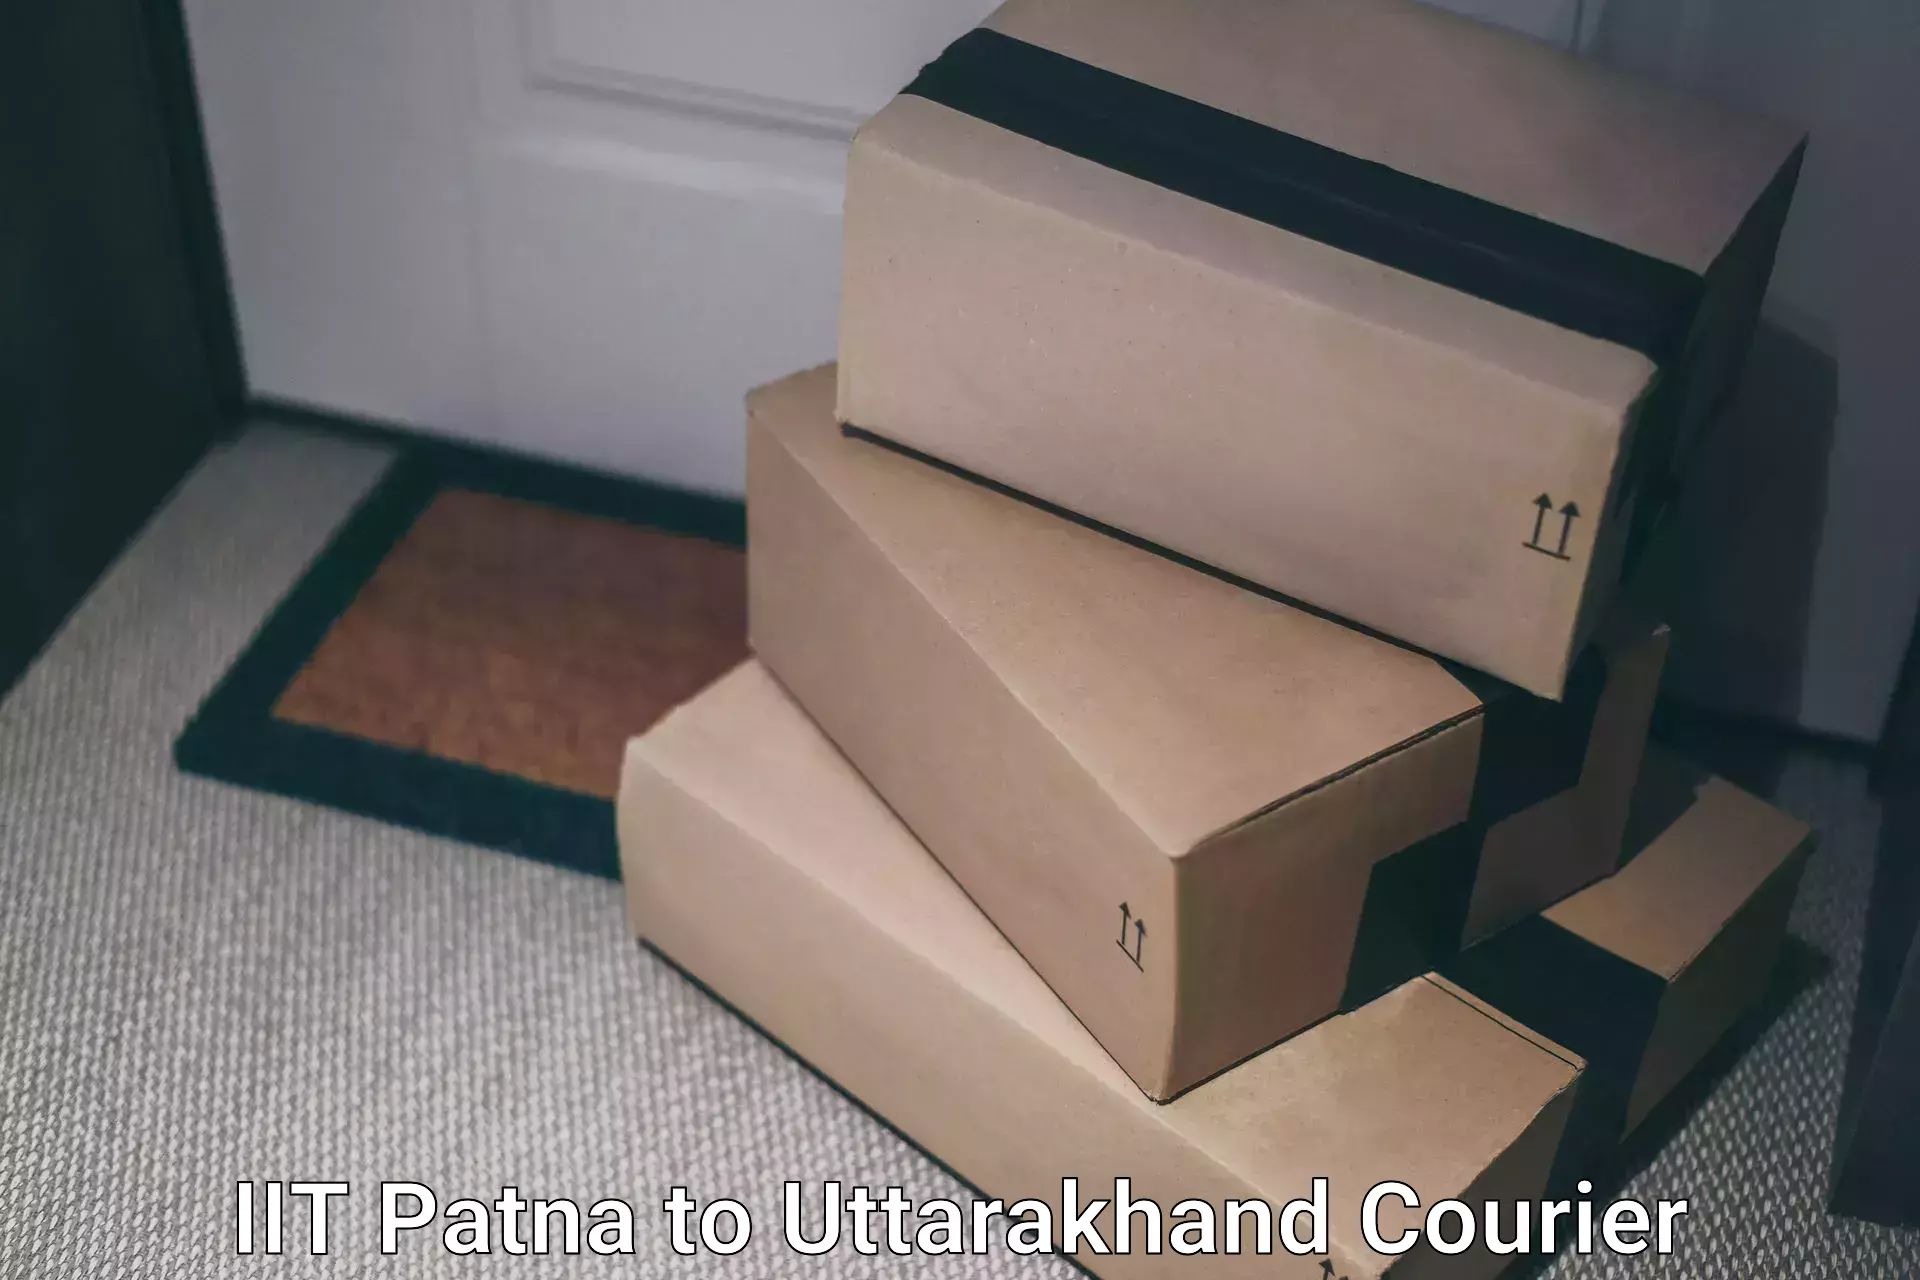 Courier service comparison IIT Patna to Uttarakhand